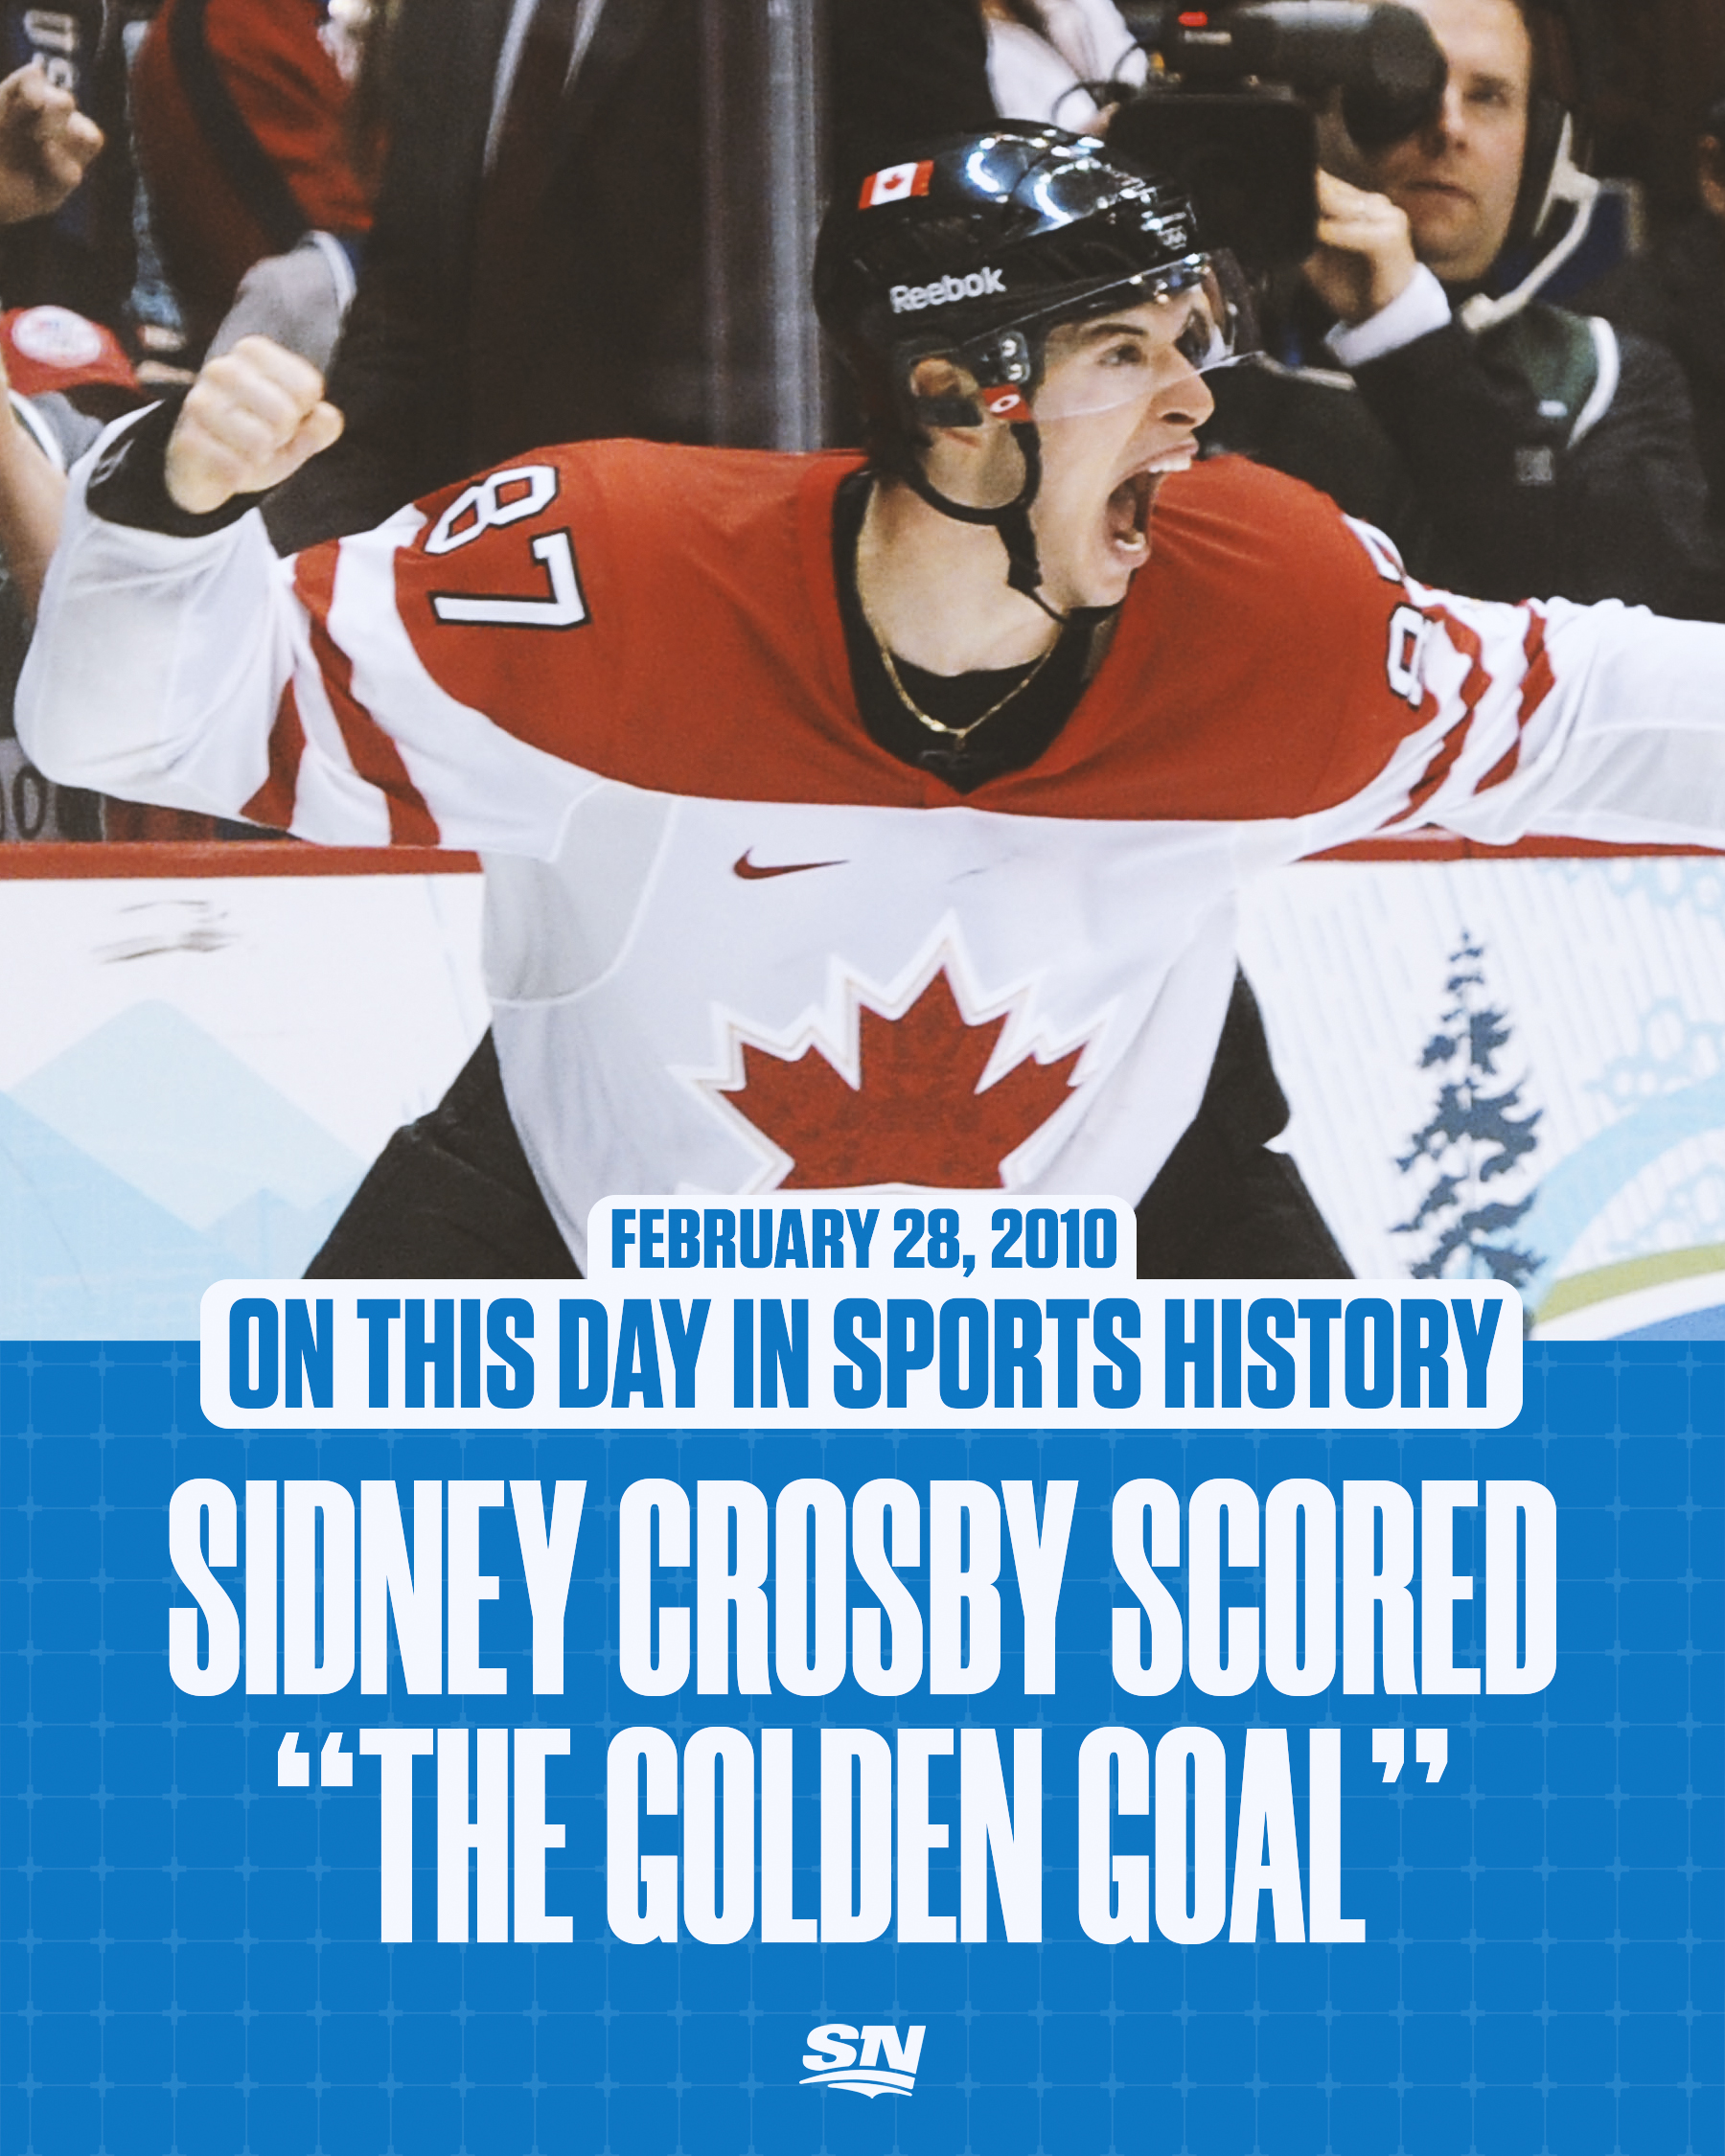 Remembering Sidney Crosby's golden goal